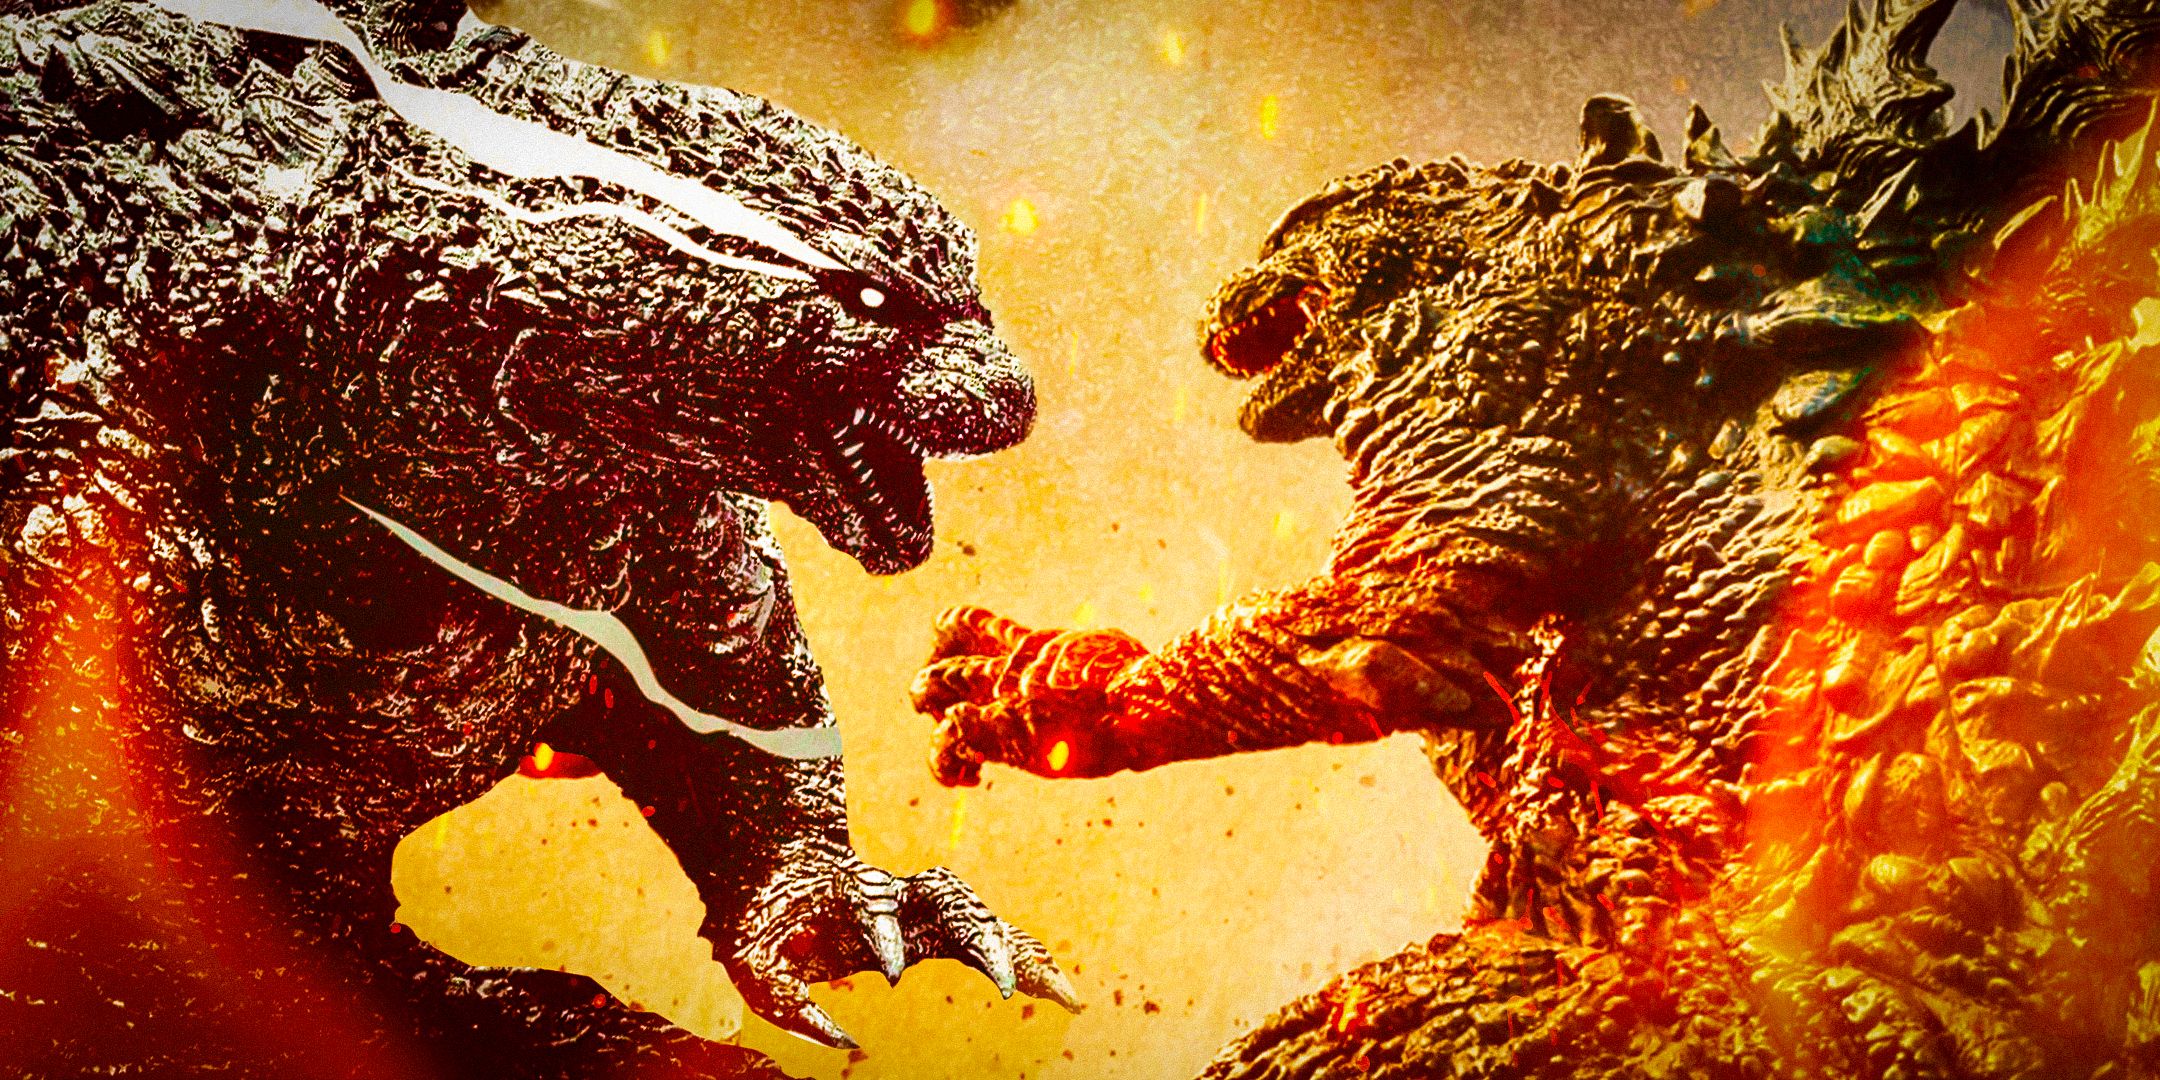 Imagery-from-Godzilla-Minus-One-